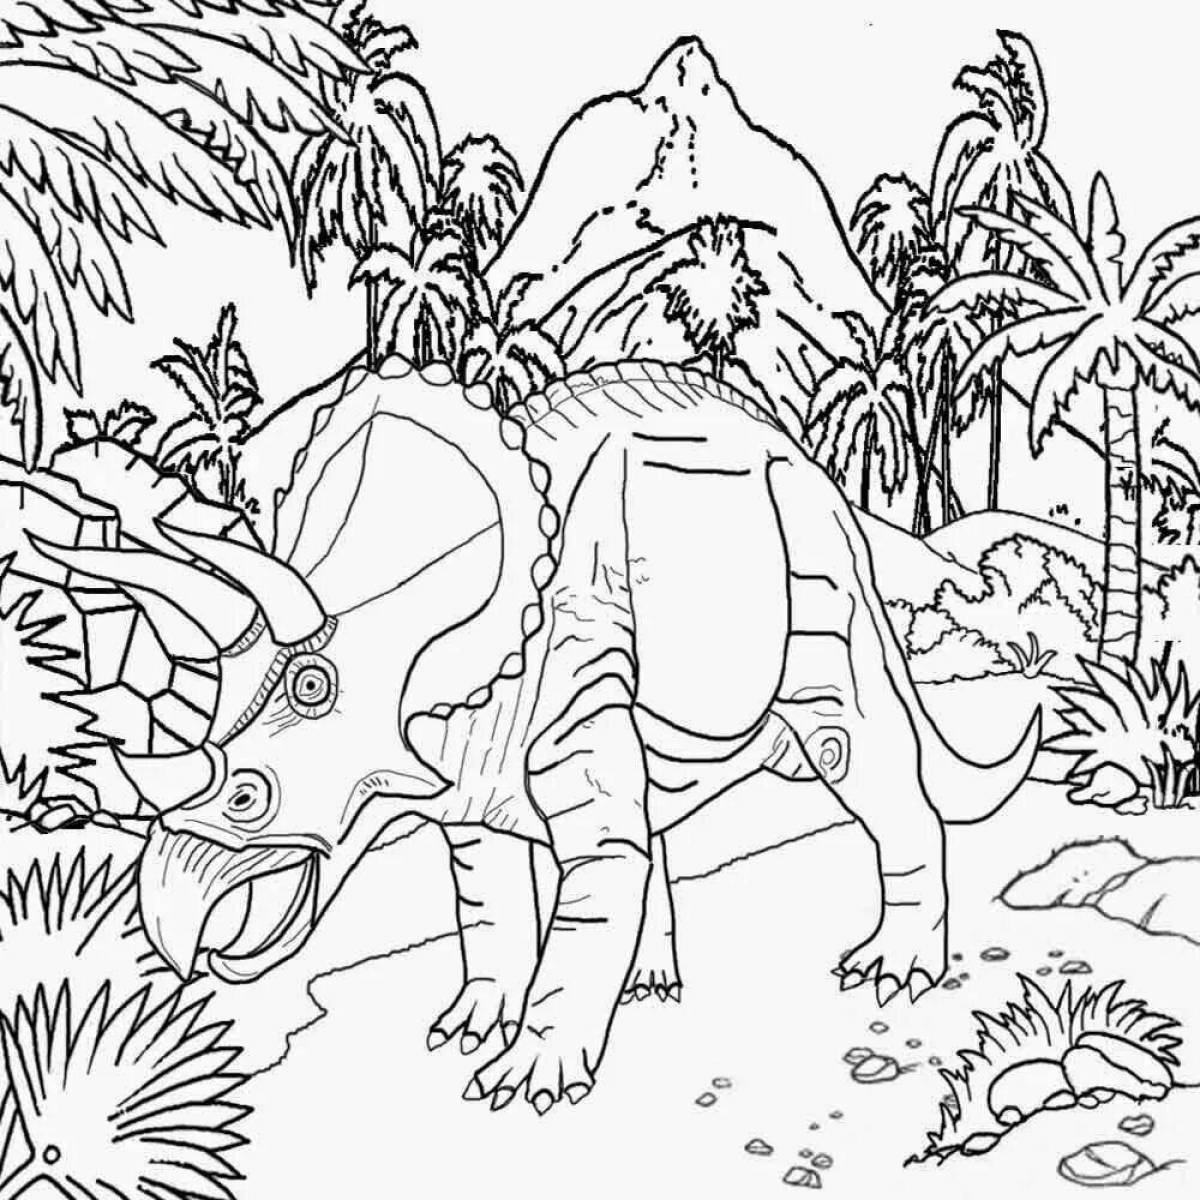 Coloring page joyful world of dinosaurs